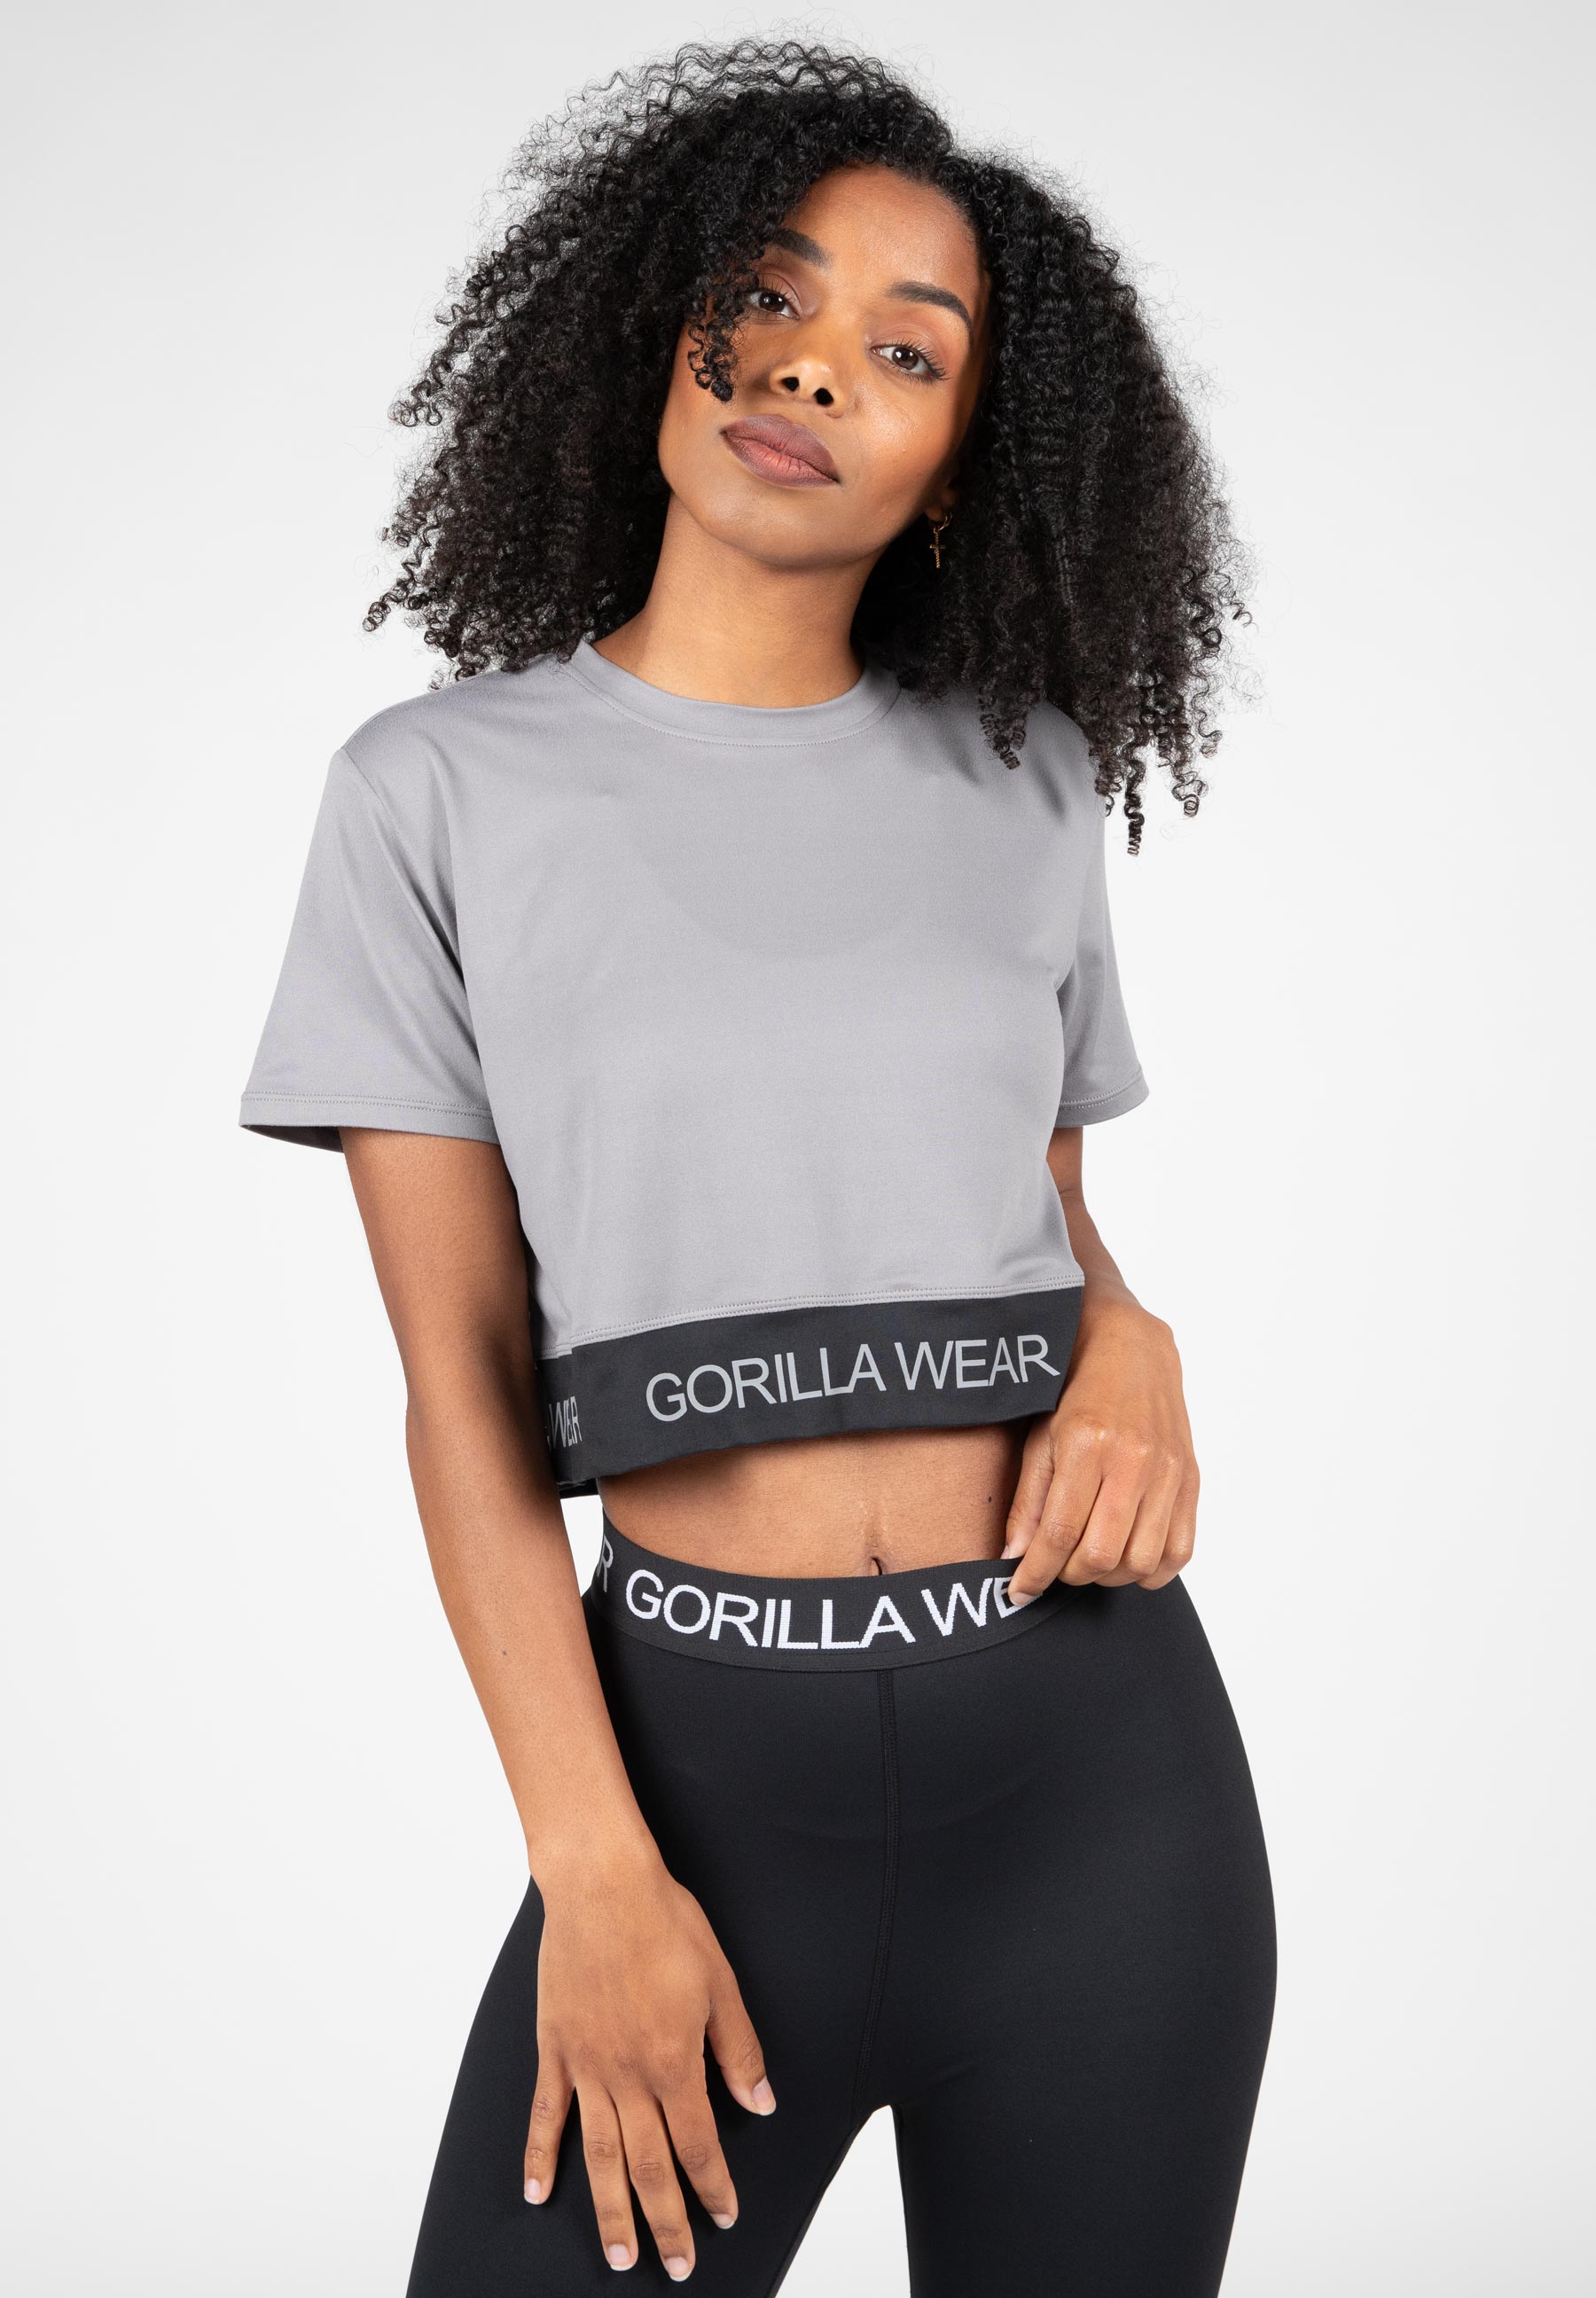 Gorilla Wear Colby Cropped T-shirt - Grijs - M